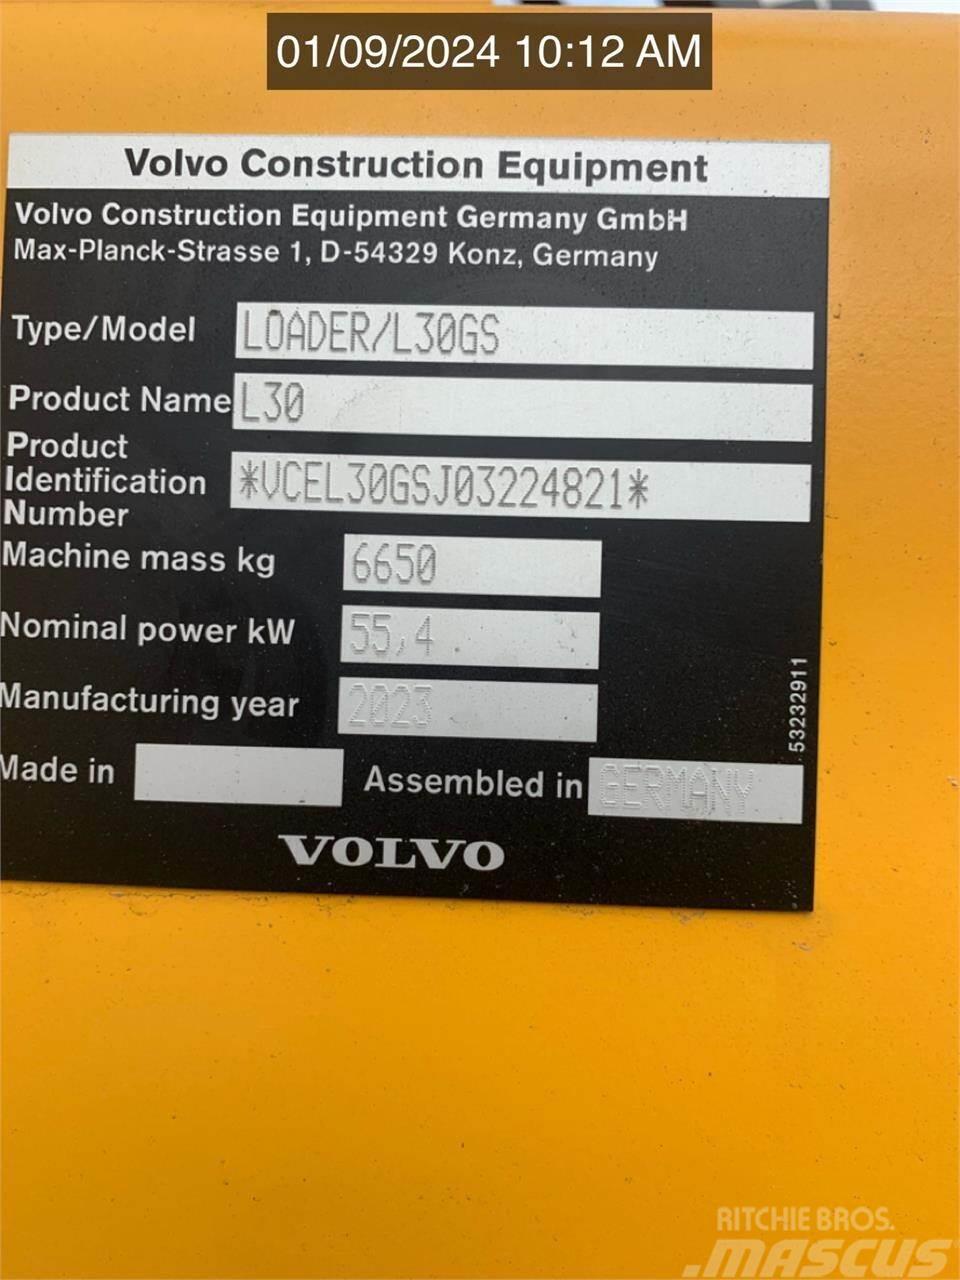 Volvo L30GS Gumikerekes homlokrakodók